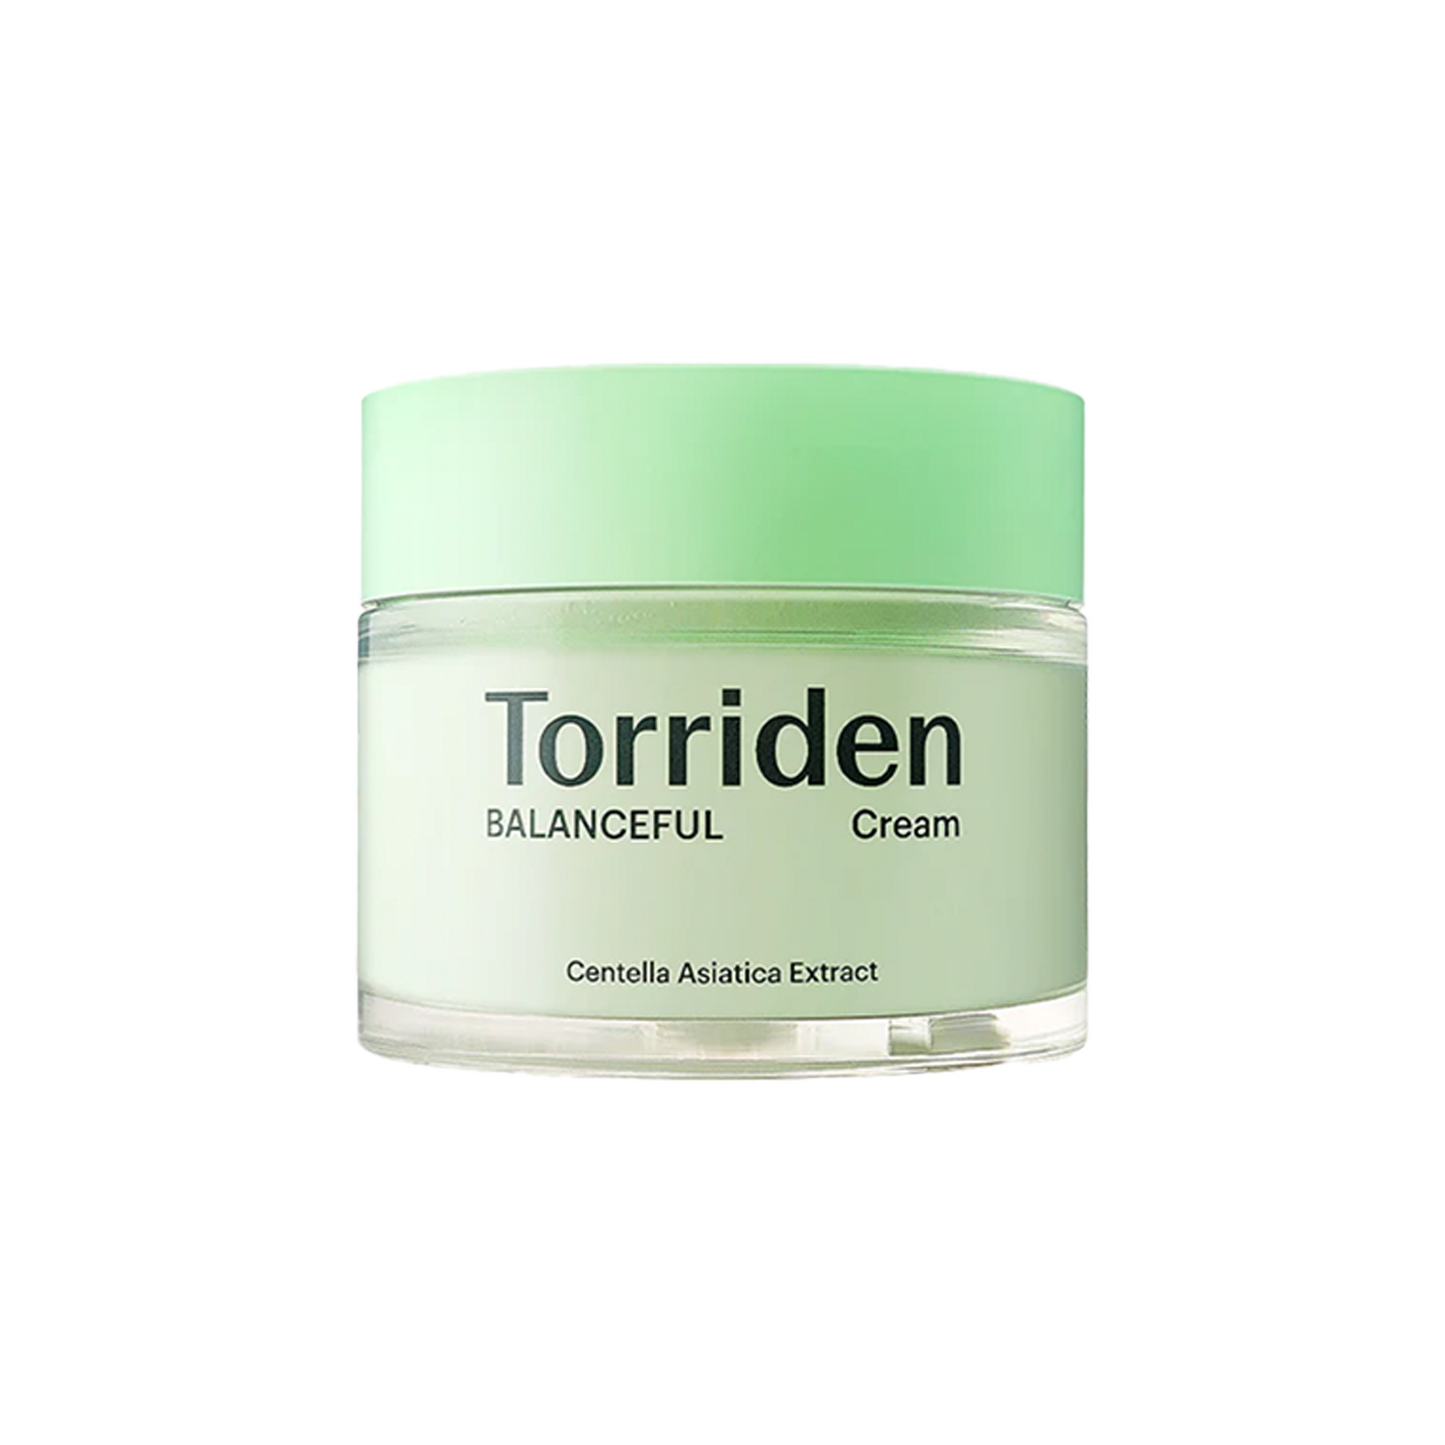 Torriden Balanceful Centella Asiatica Extract Cream 80ml